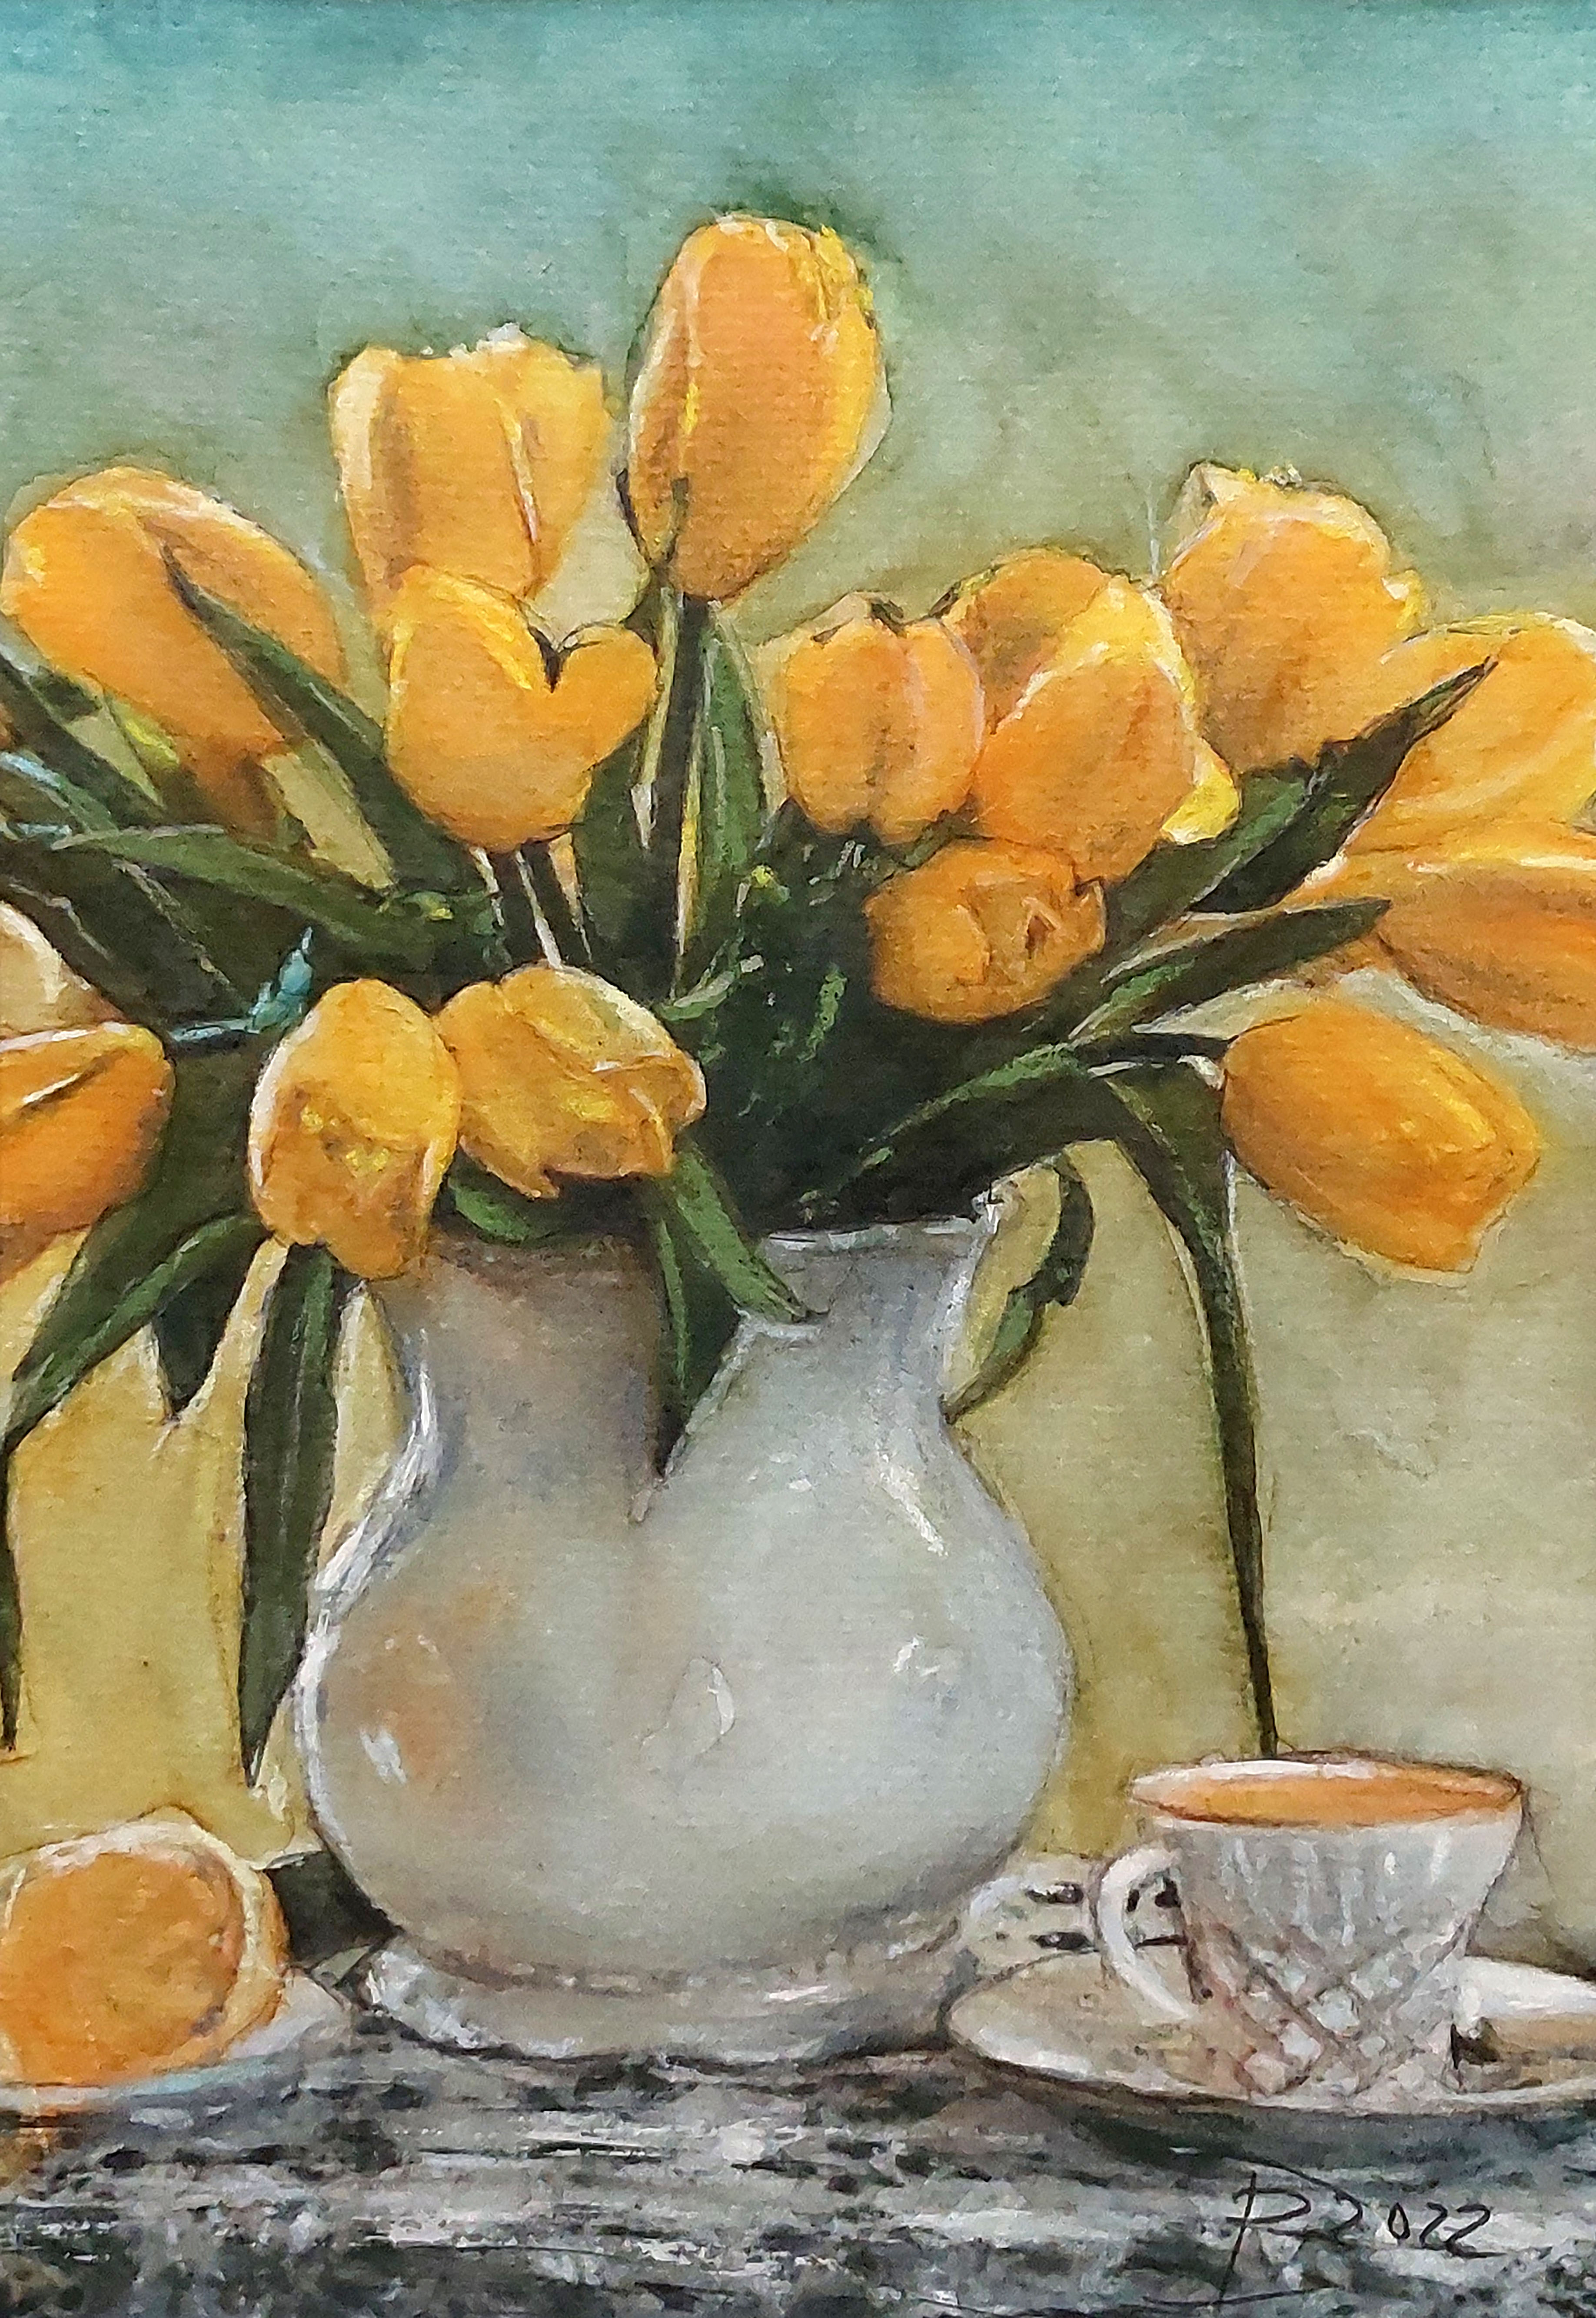 Bukiet tulipanów — Ida Perens